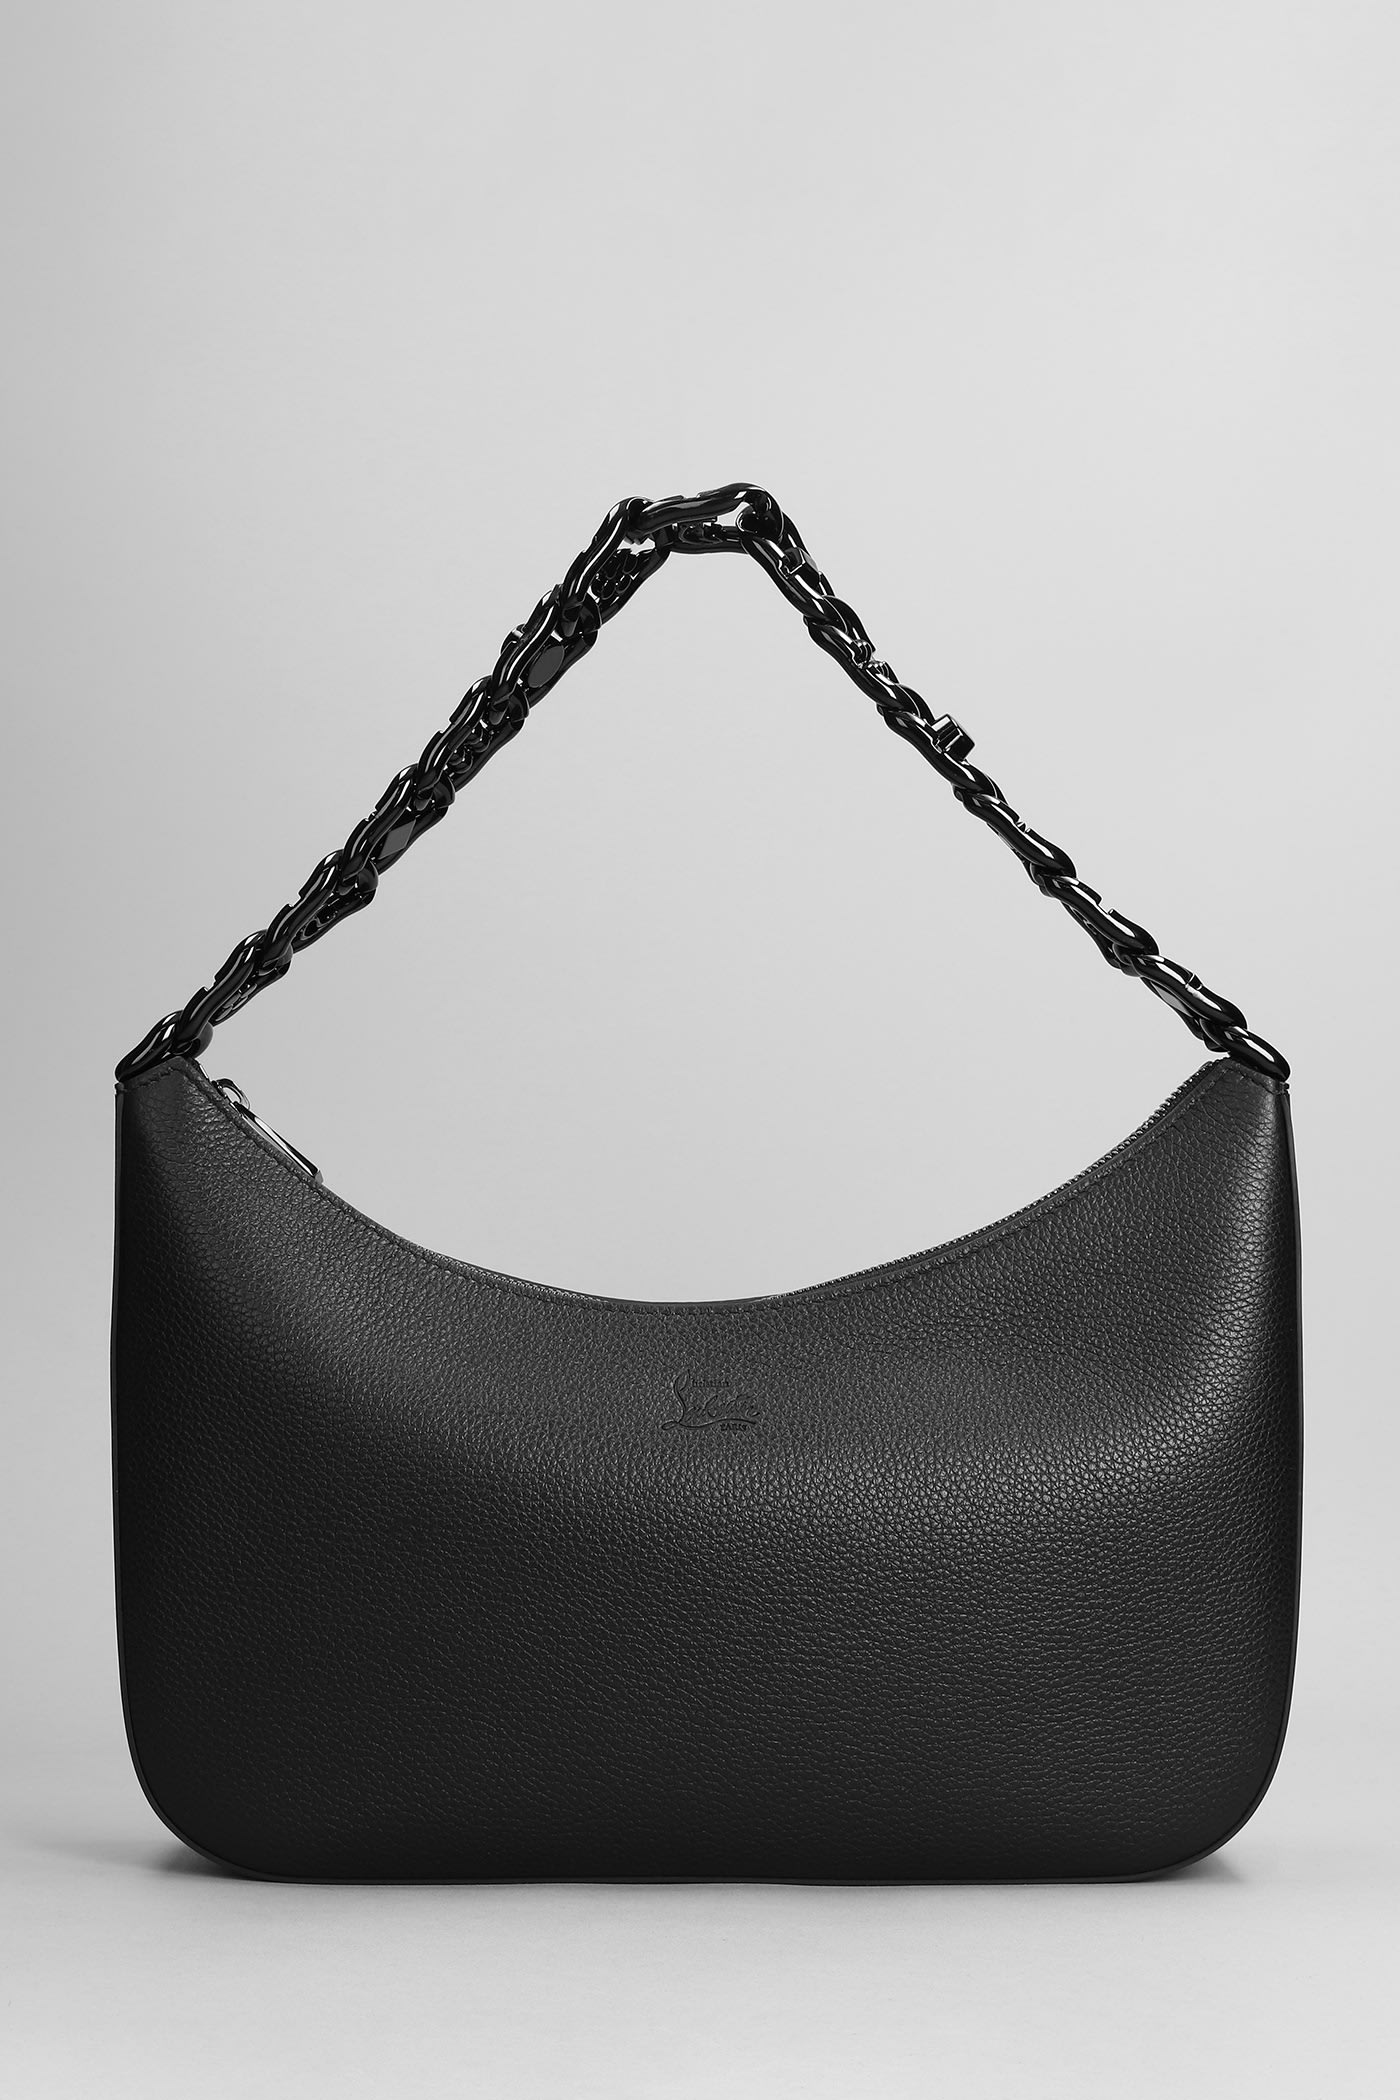 Loubila Chain Shoulder Bag In Black Leather